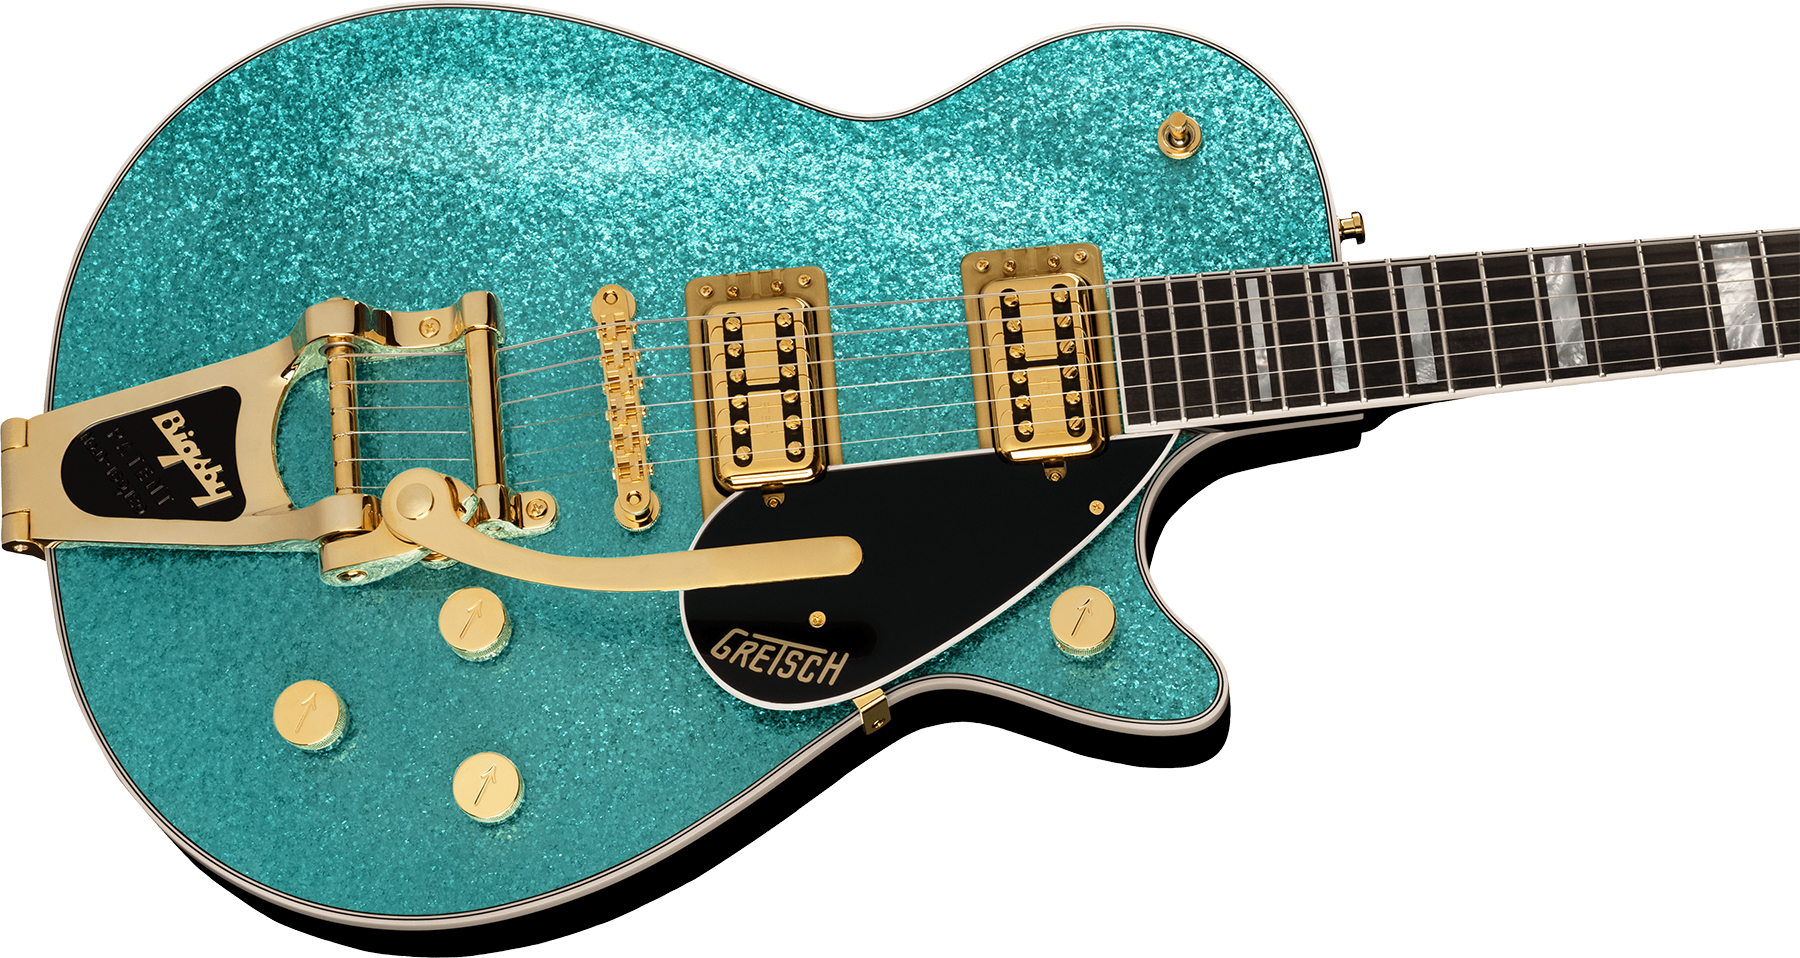 Gretsch G6229tg Jet Bt Players Edition Pro Jap 2h Trem Bigsby Rw - Ocean Turquoise Sparkle - Single cut electric guitar - Variation 2